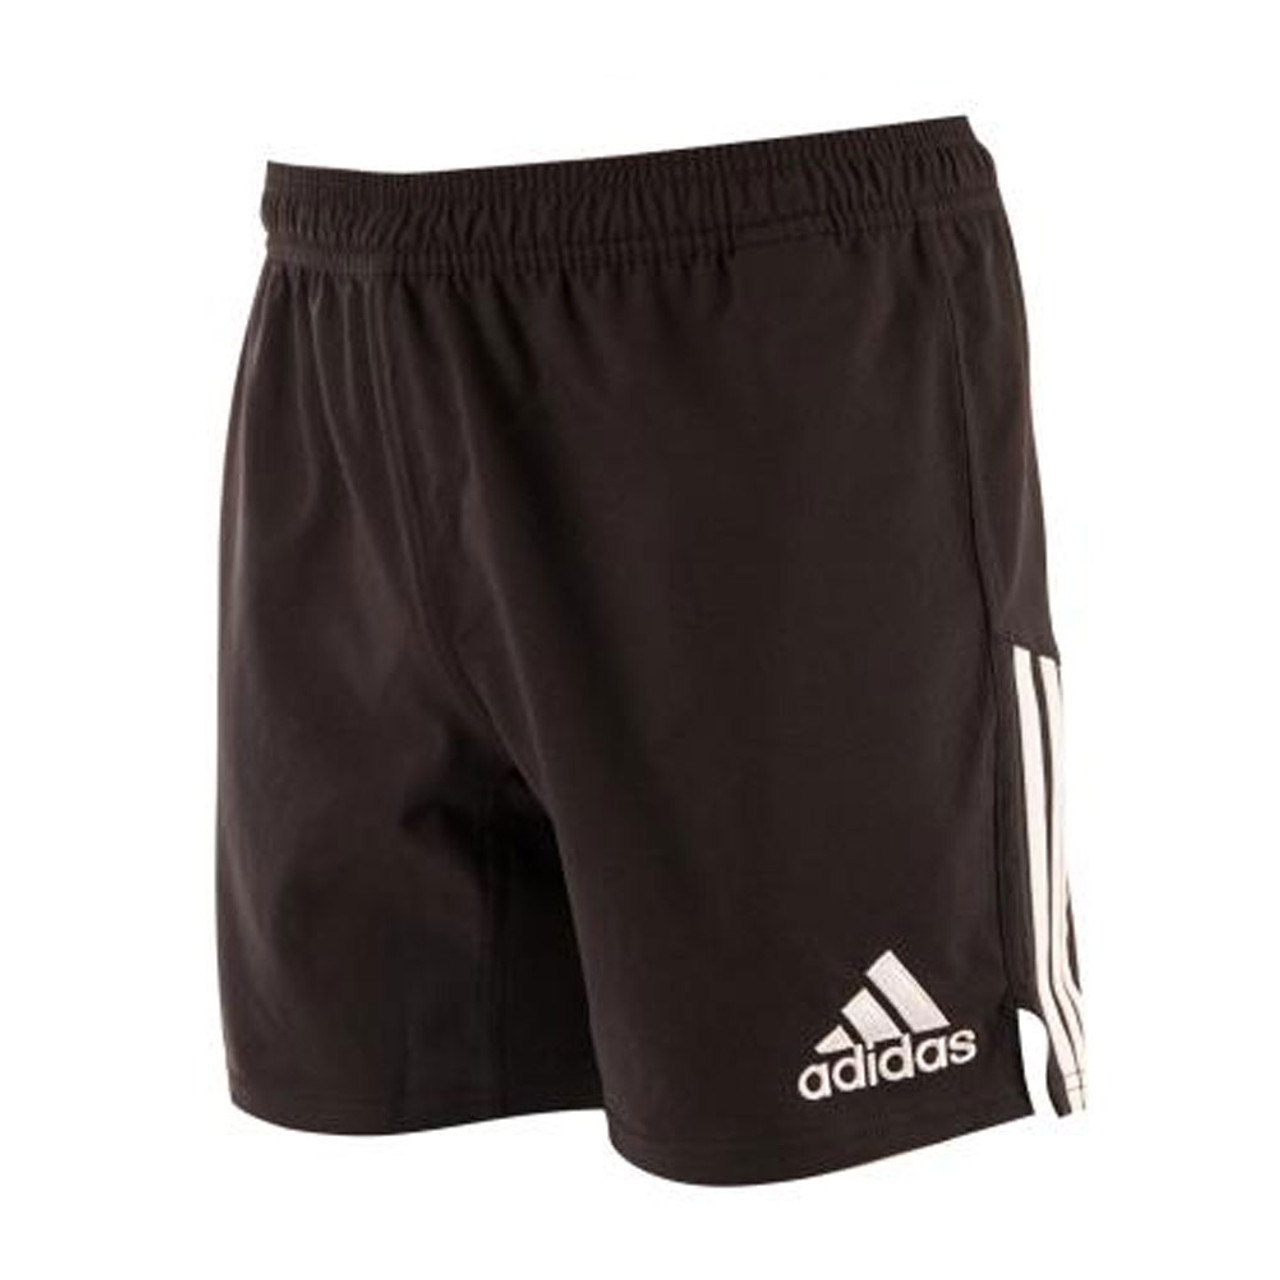 rugby shorts adidas